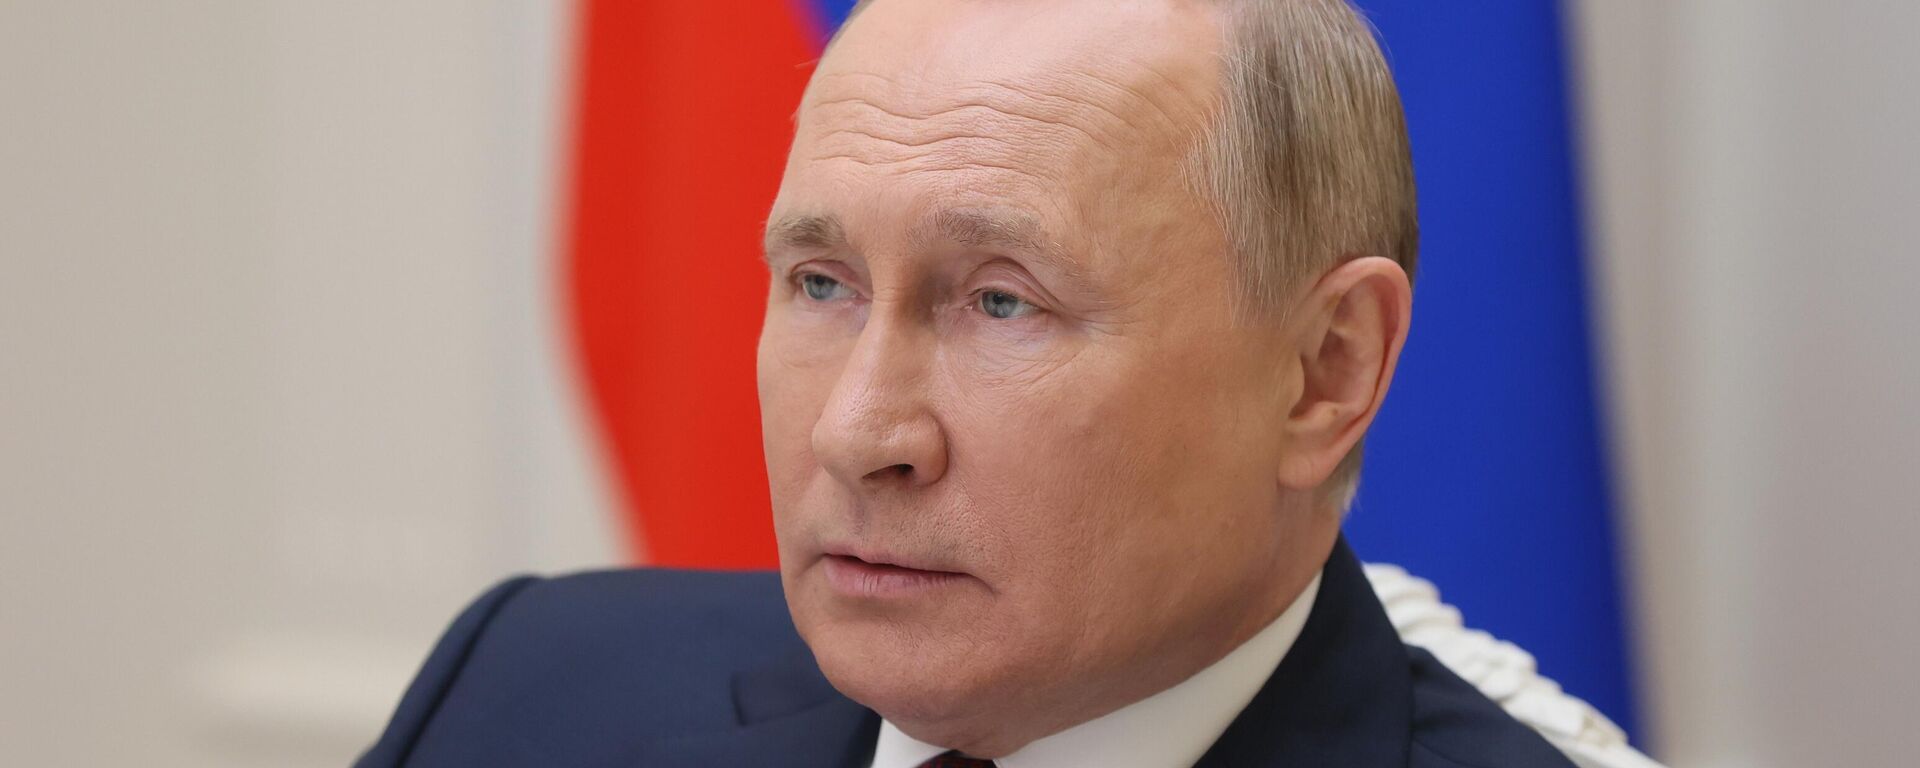 Vladímir Putin, presidente de Rusia - Sputnik Mundo, 1920, 30.11.2021